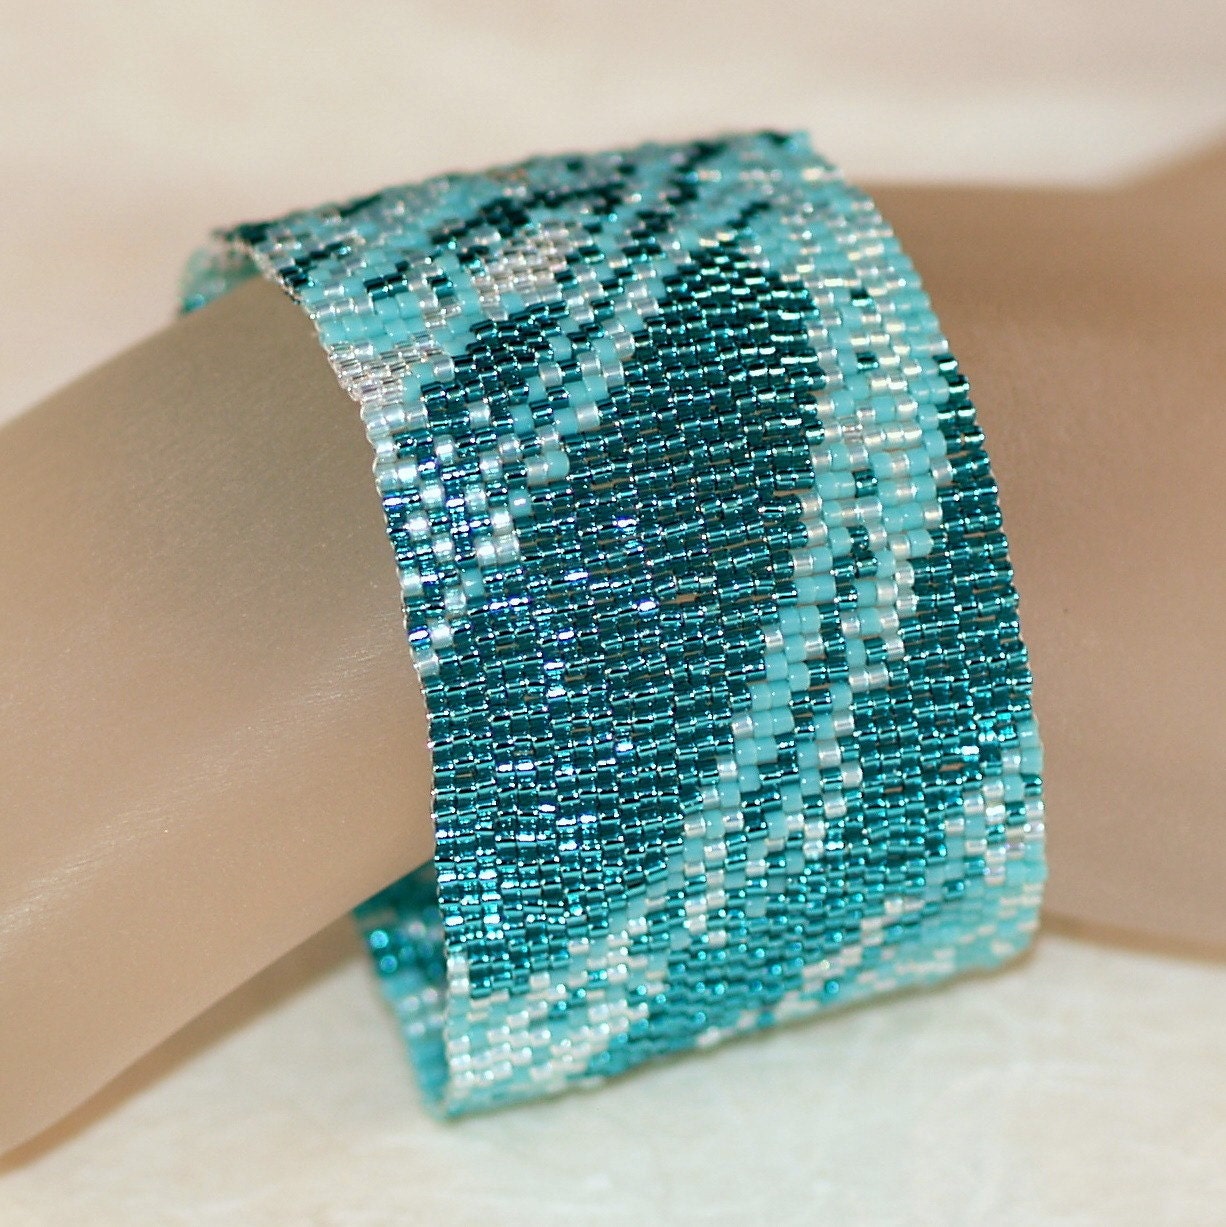 Seafoam Fabric - Shades of Aqua and Turquoise in a Peyote Bracelet / Cuff (3207)